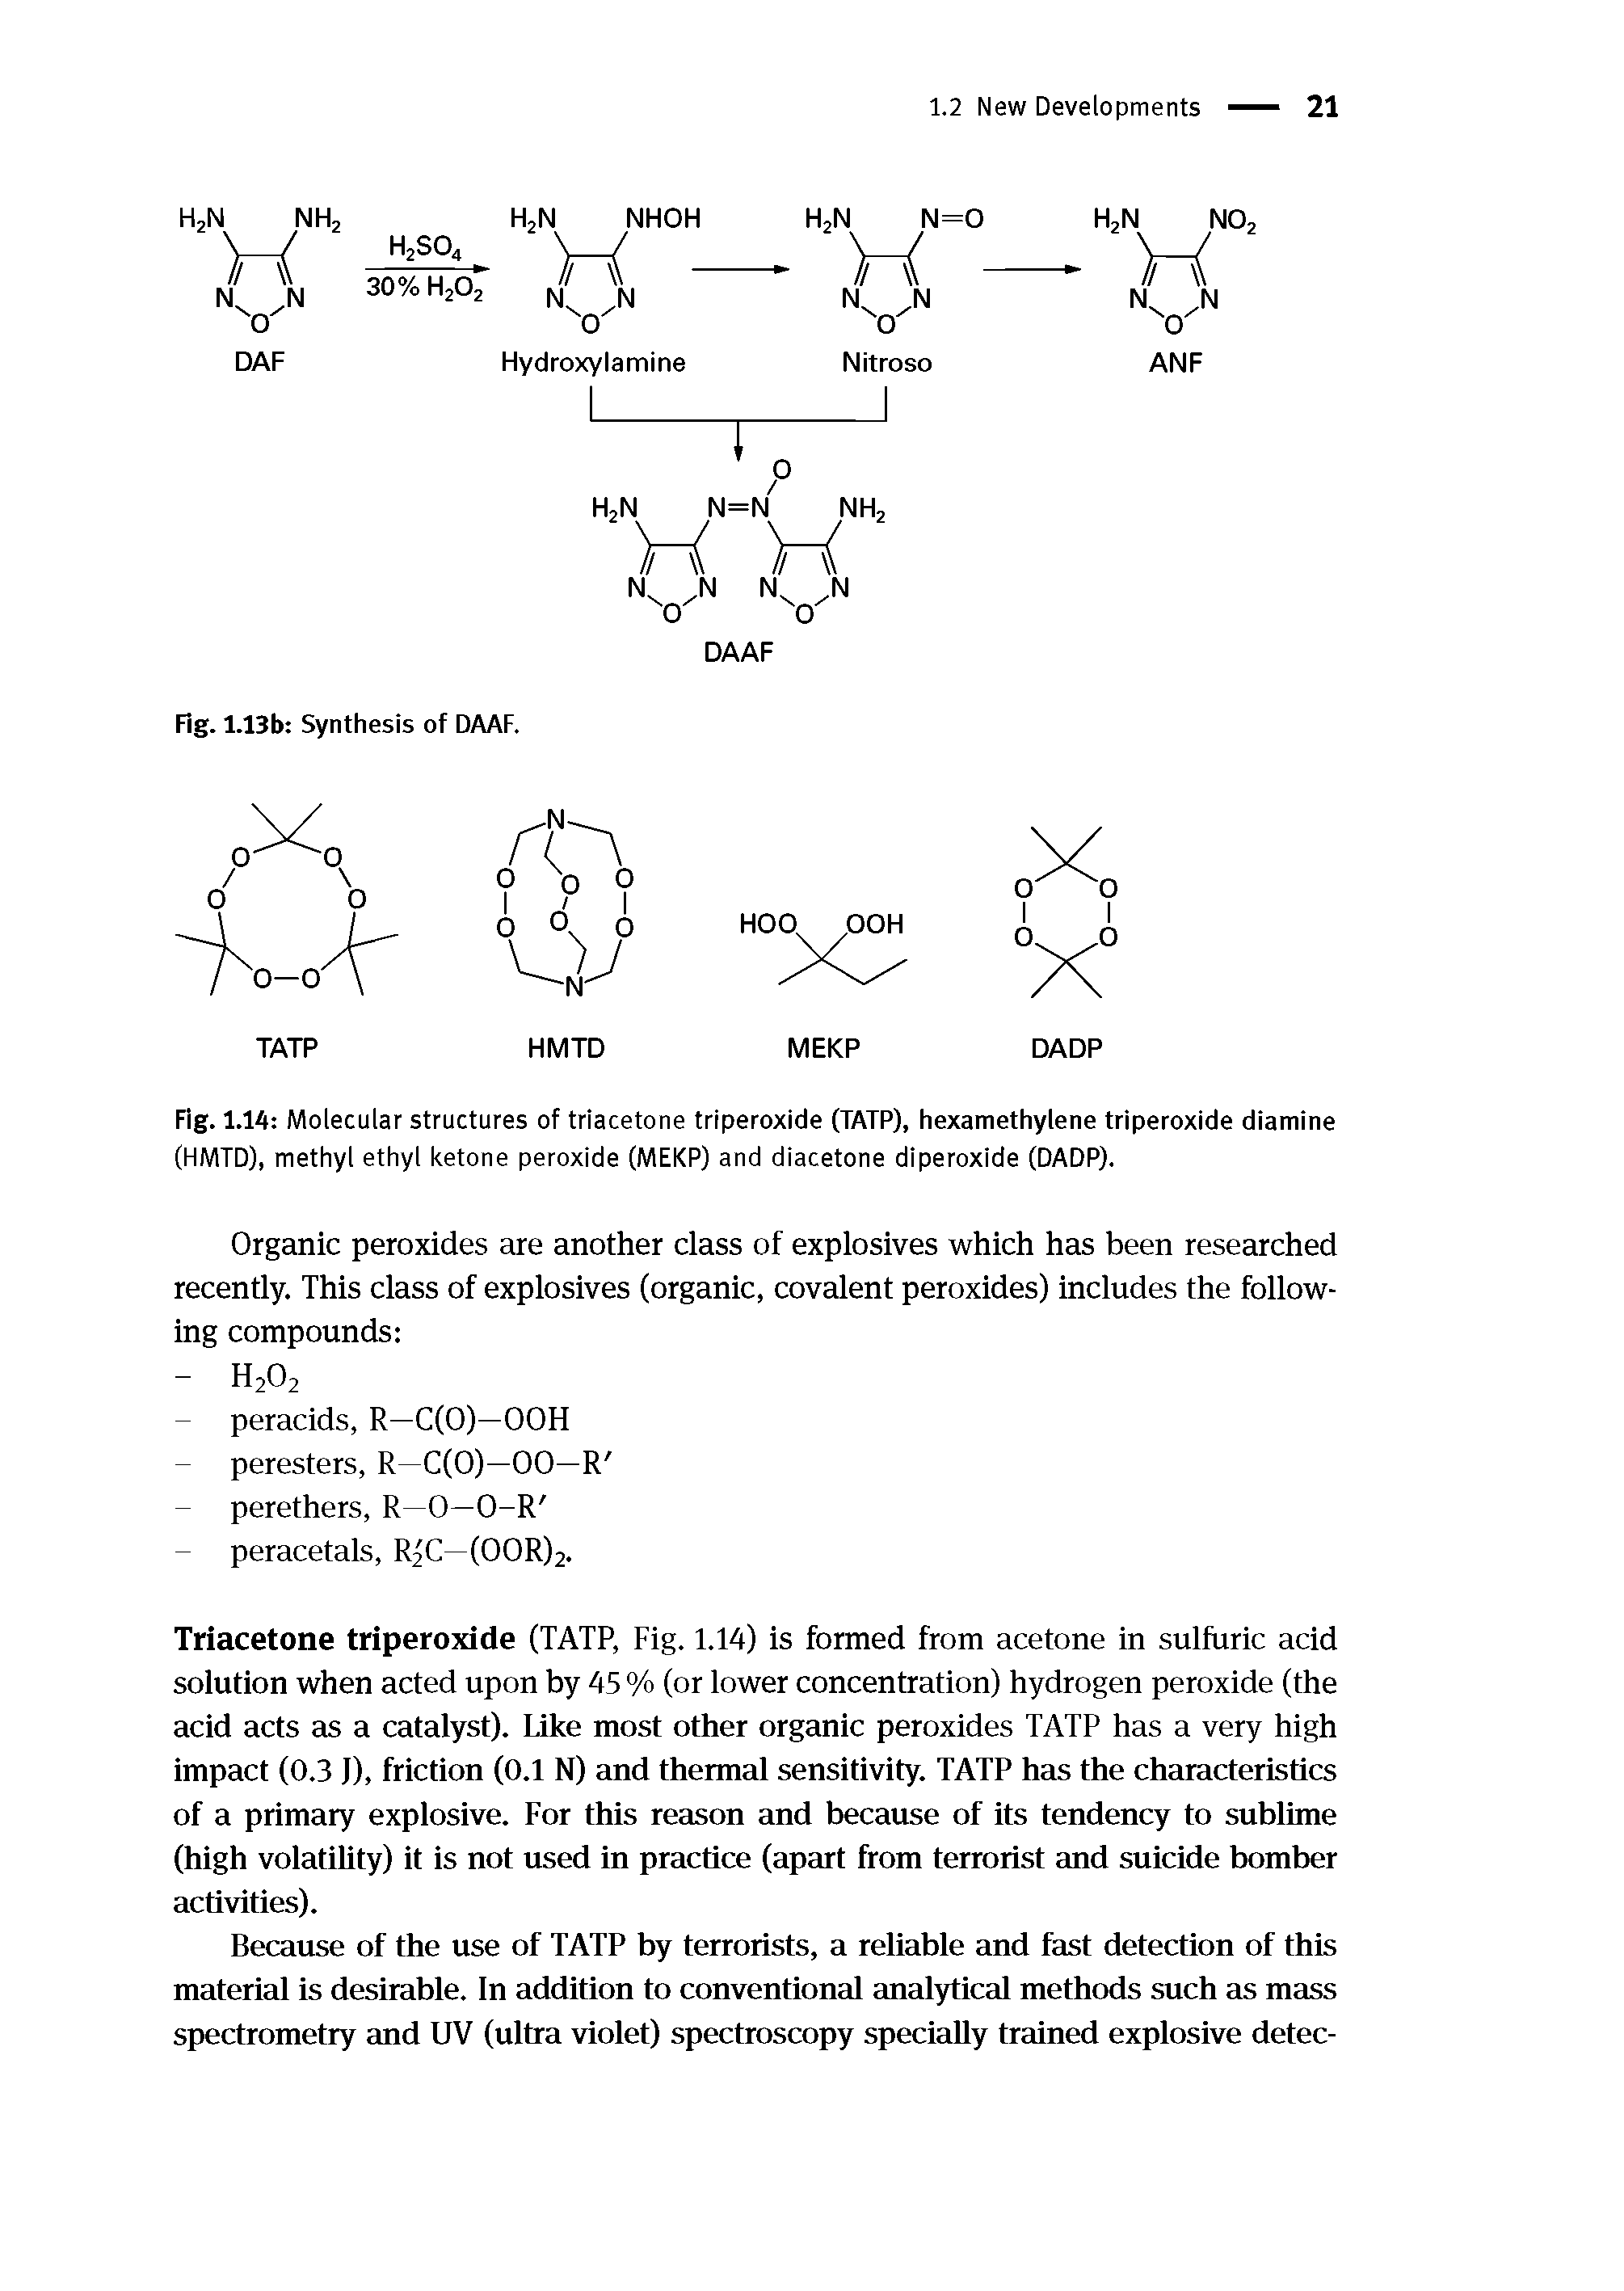 Fig. 1.14 Molecular structures of triacetone triperoxide (TATP), hexamethylene triperoxide diamine (HMTD), methyl ethyl ketone peroxide (MEKP) and diacetone diperoxide (DADP).